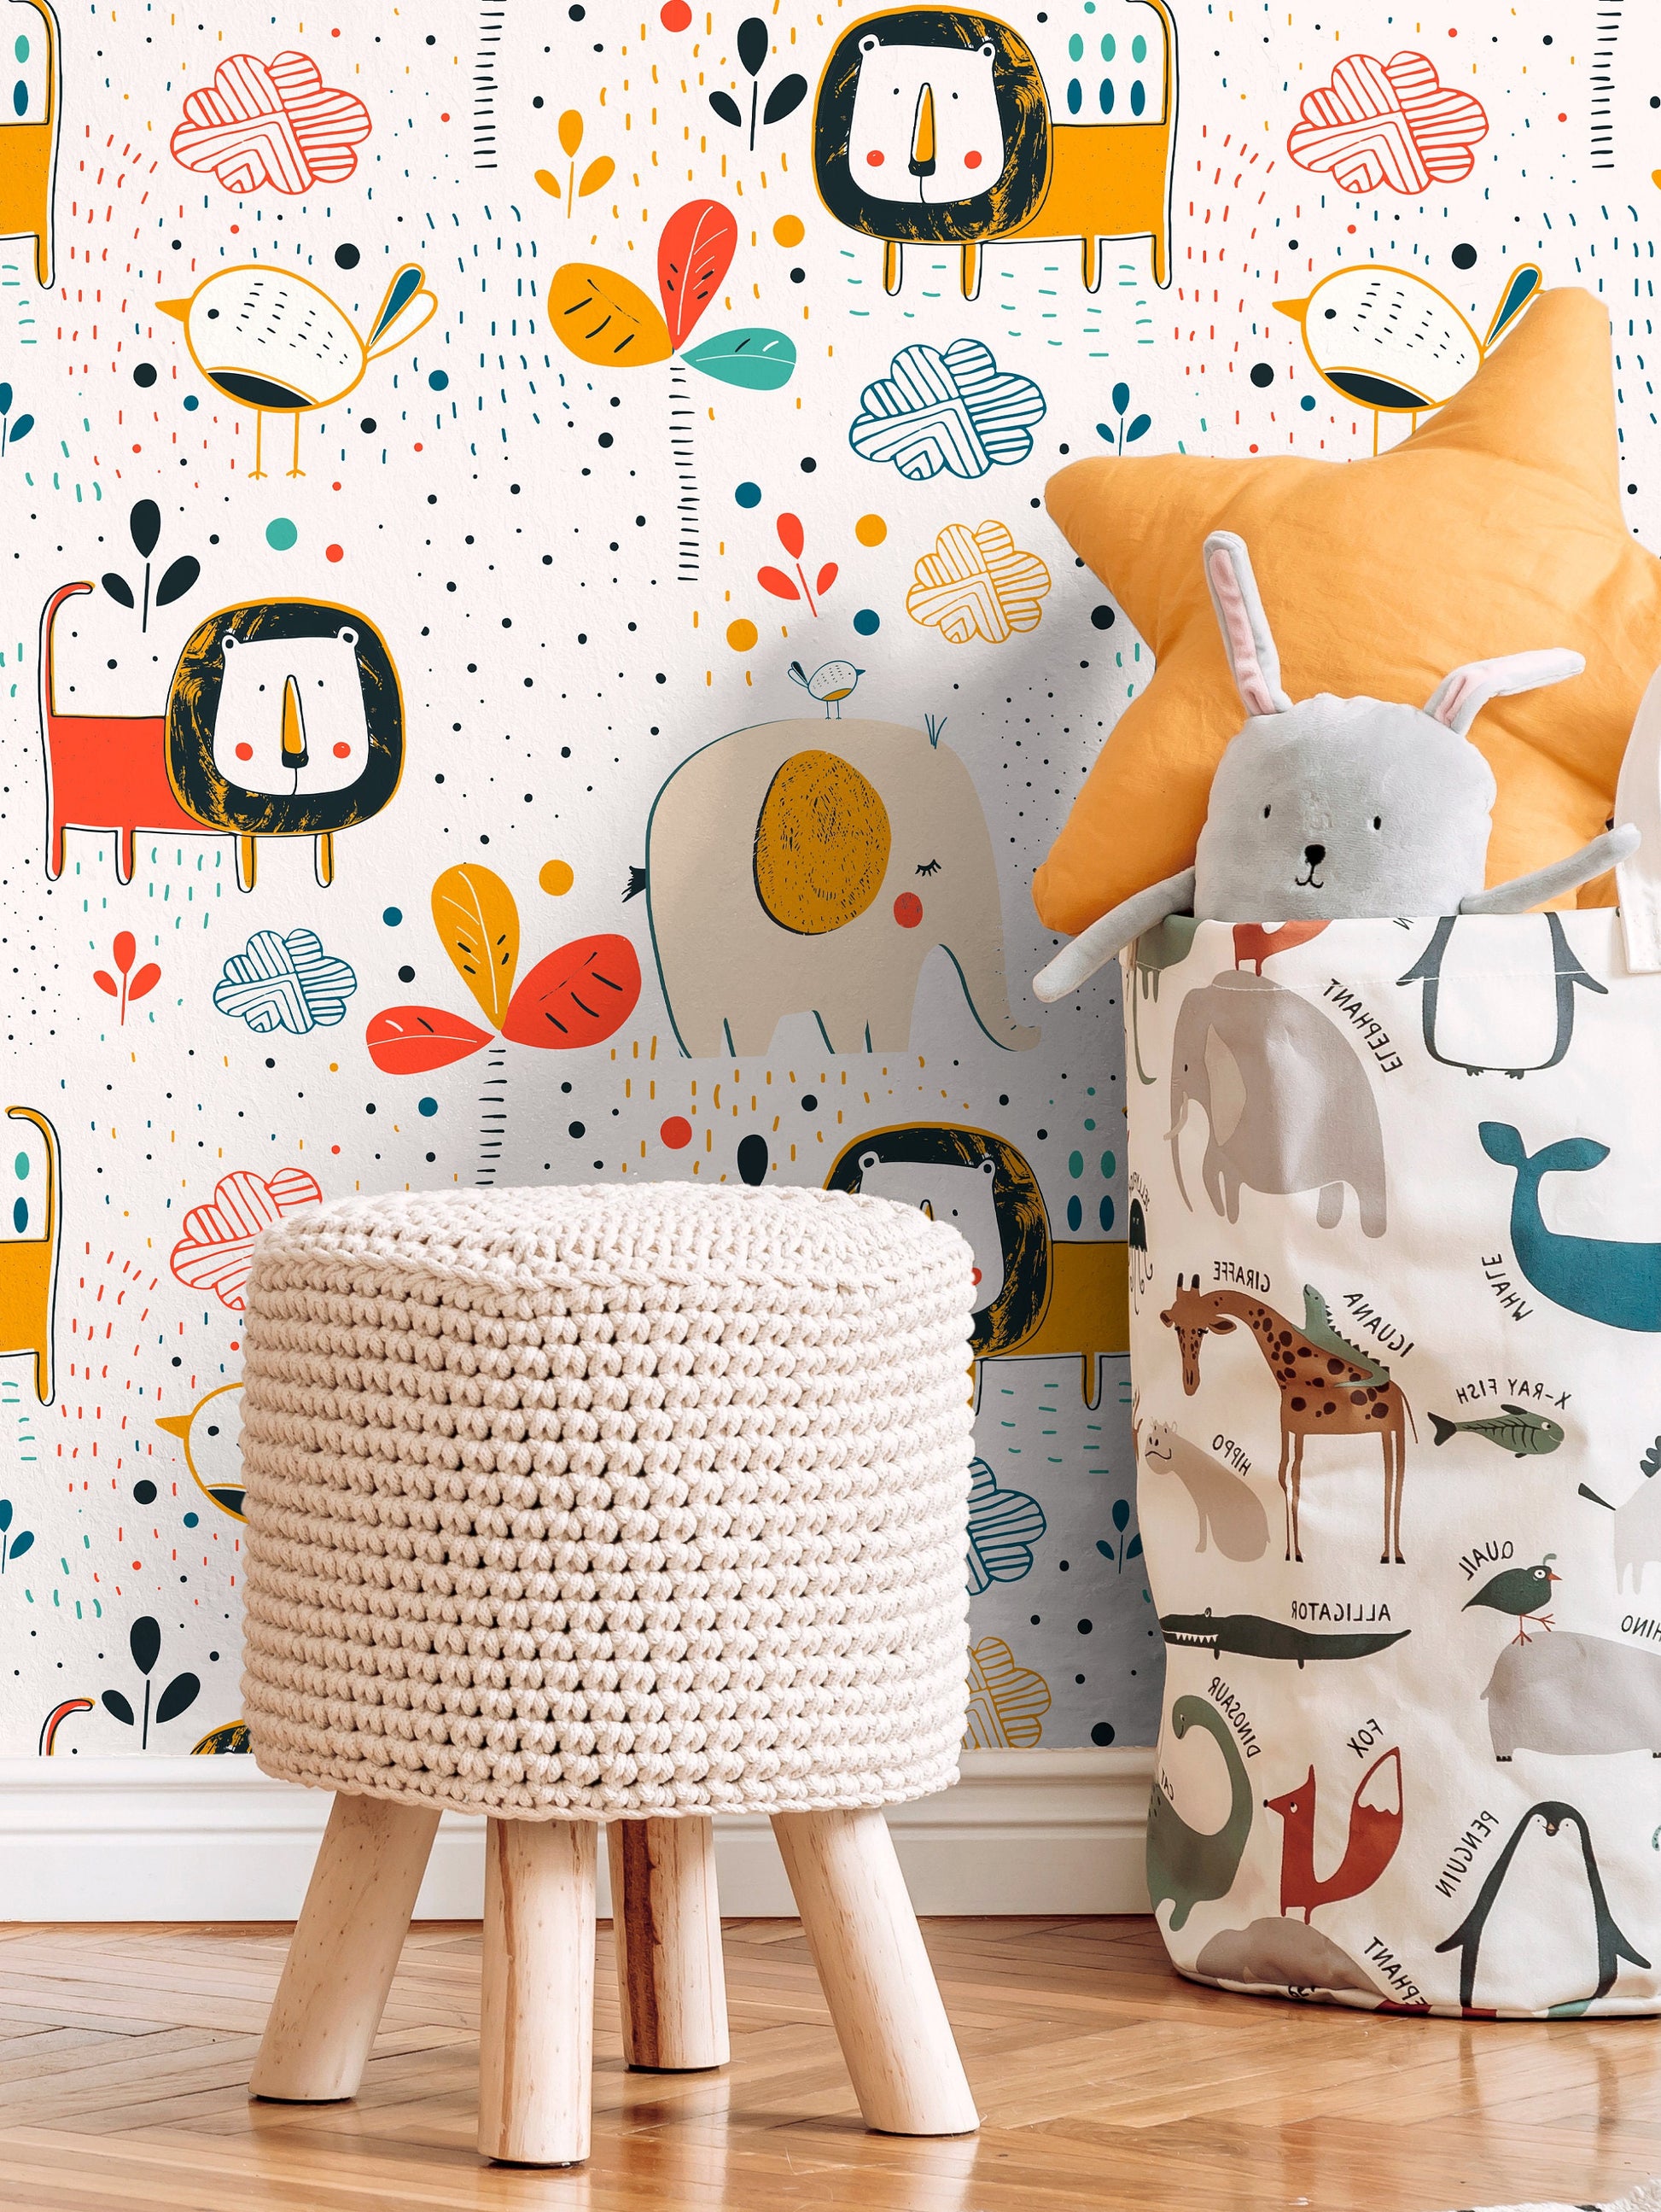 Nursery Wallpaper Removable Wallpaper Home Decor Wall Art Room Decor / Colorful Animal Kids Wallpaper - B738